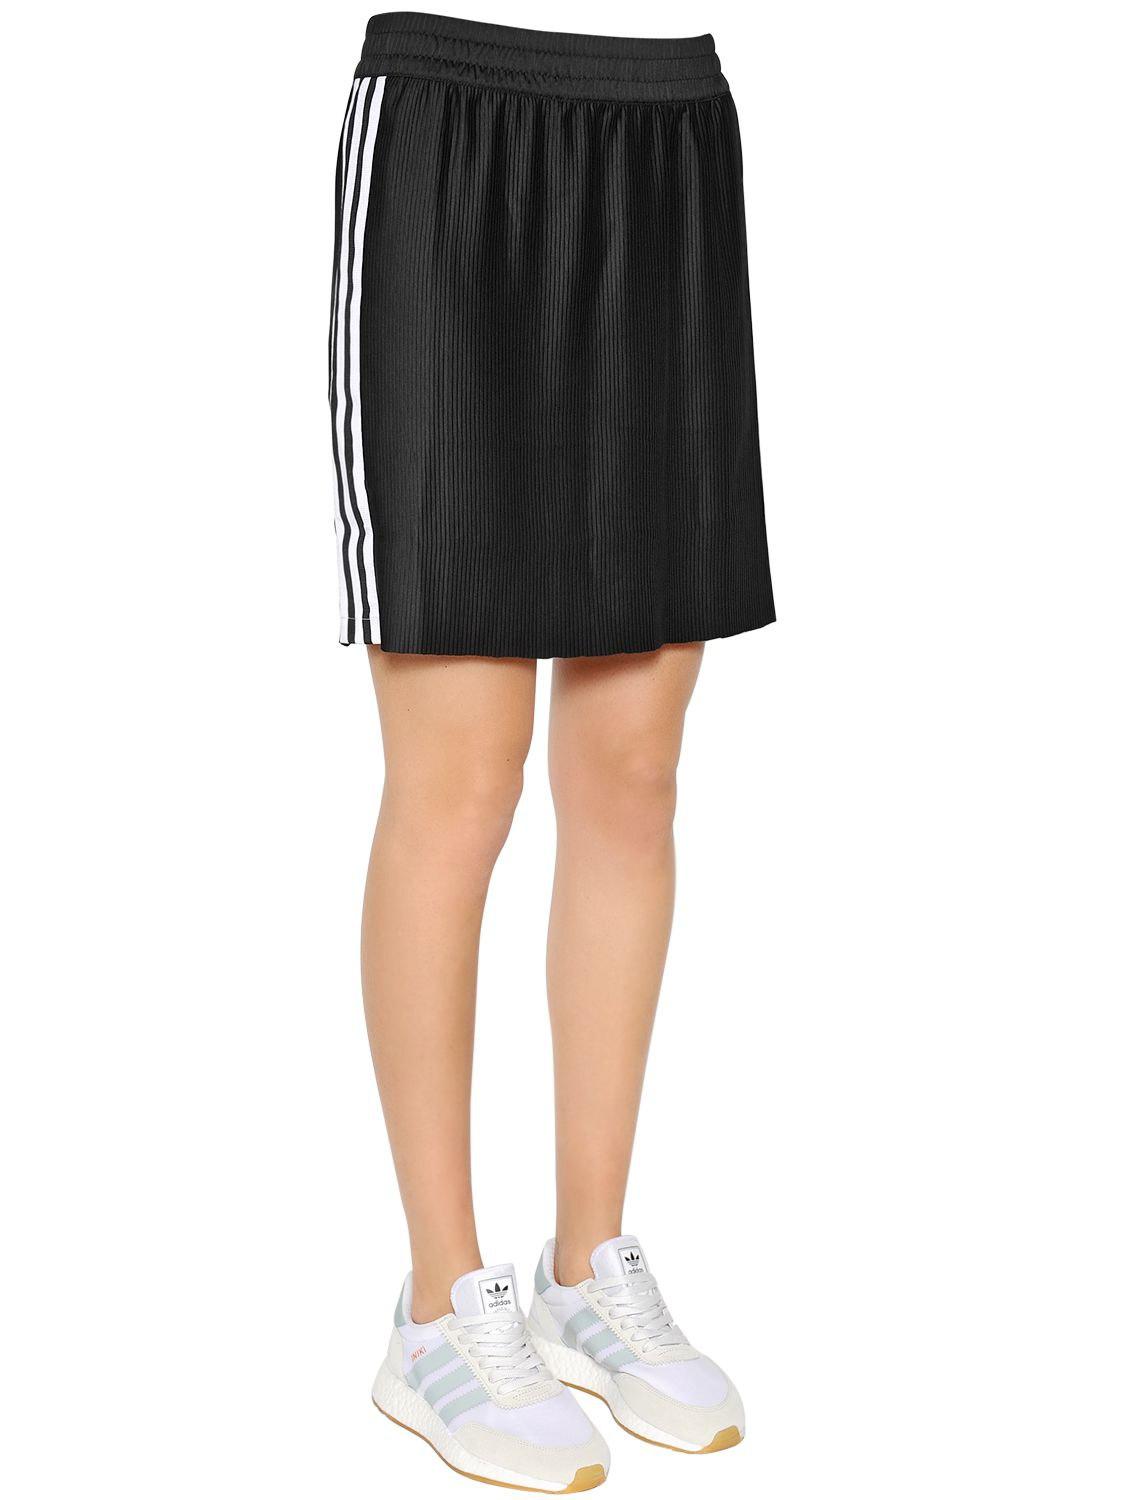 adidas Originals 3 Stripes Pleated Skirt in Black - Lyst